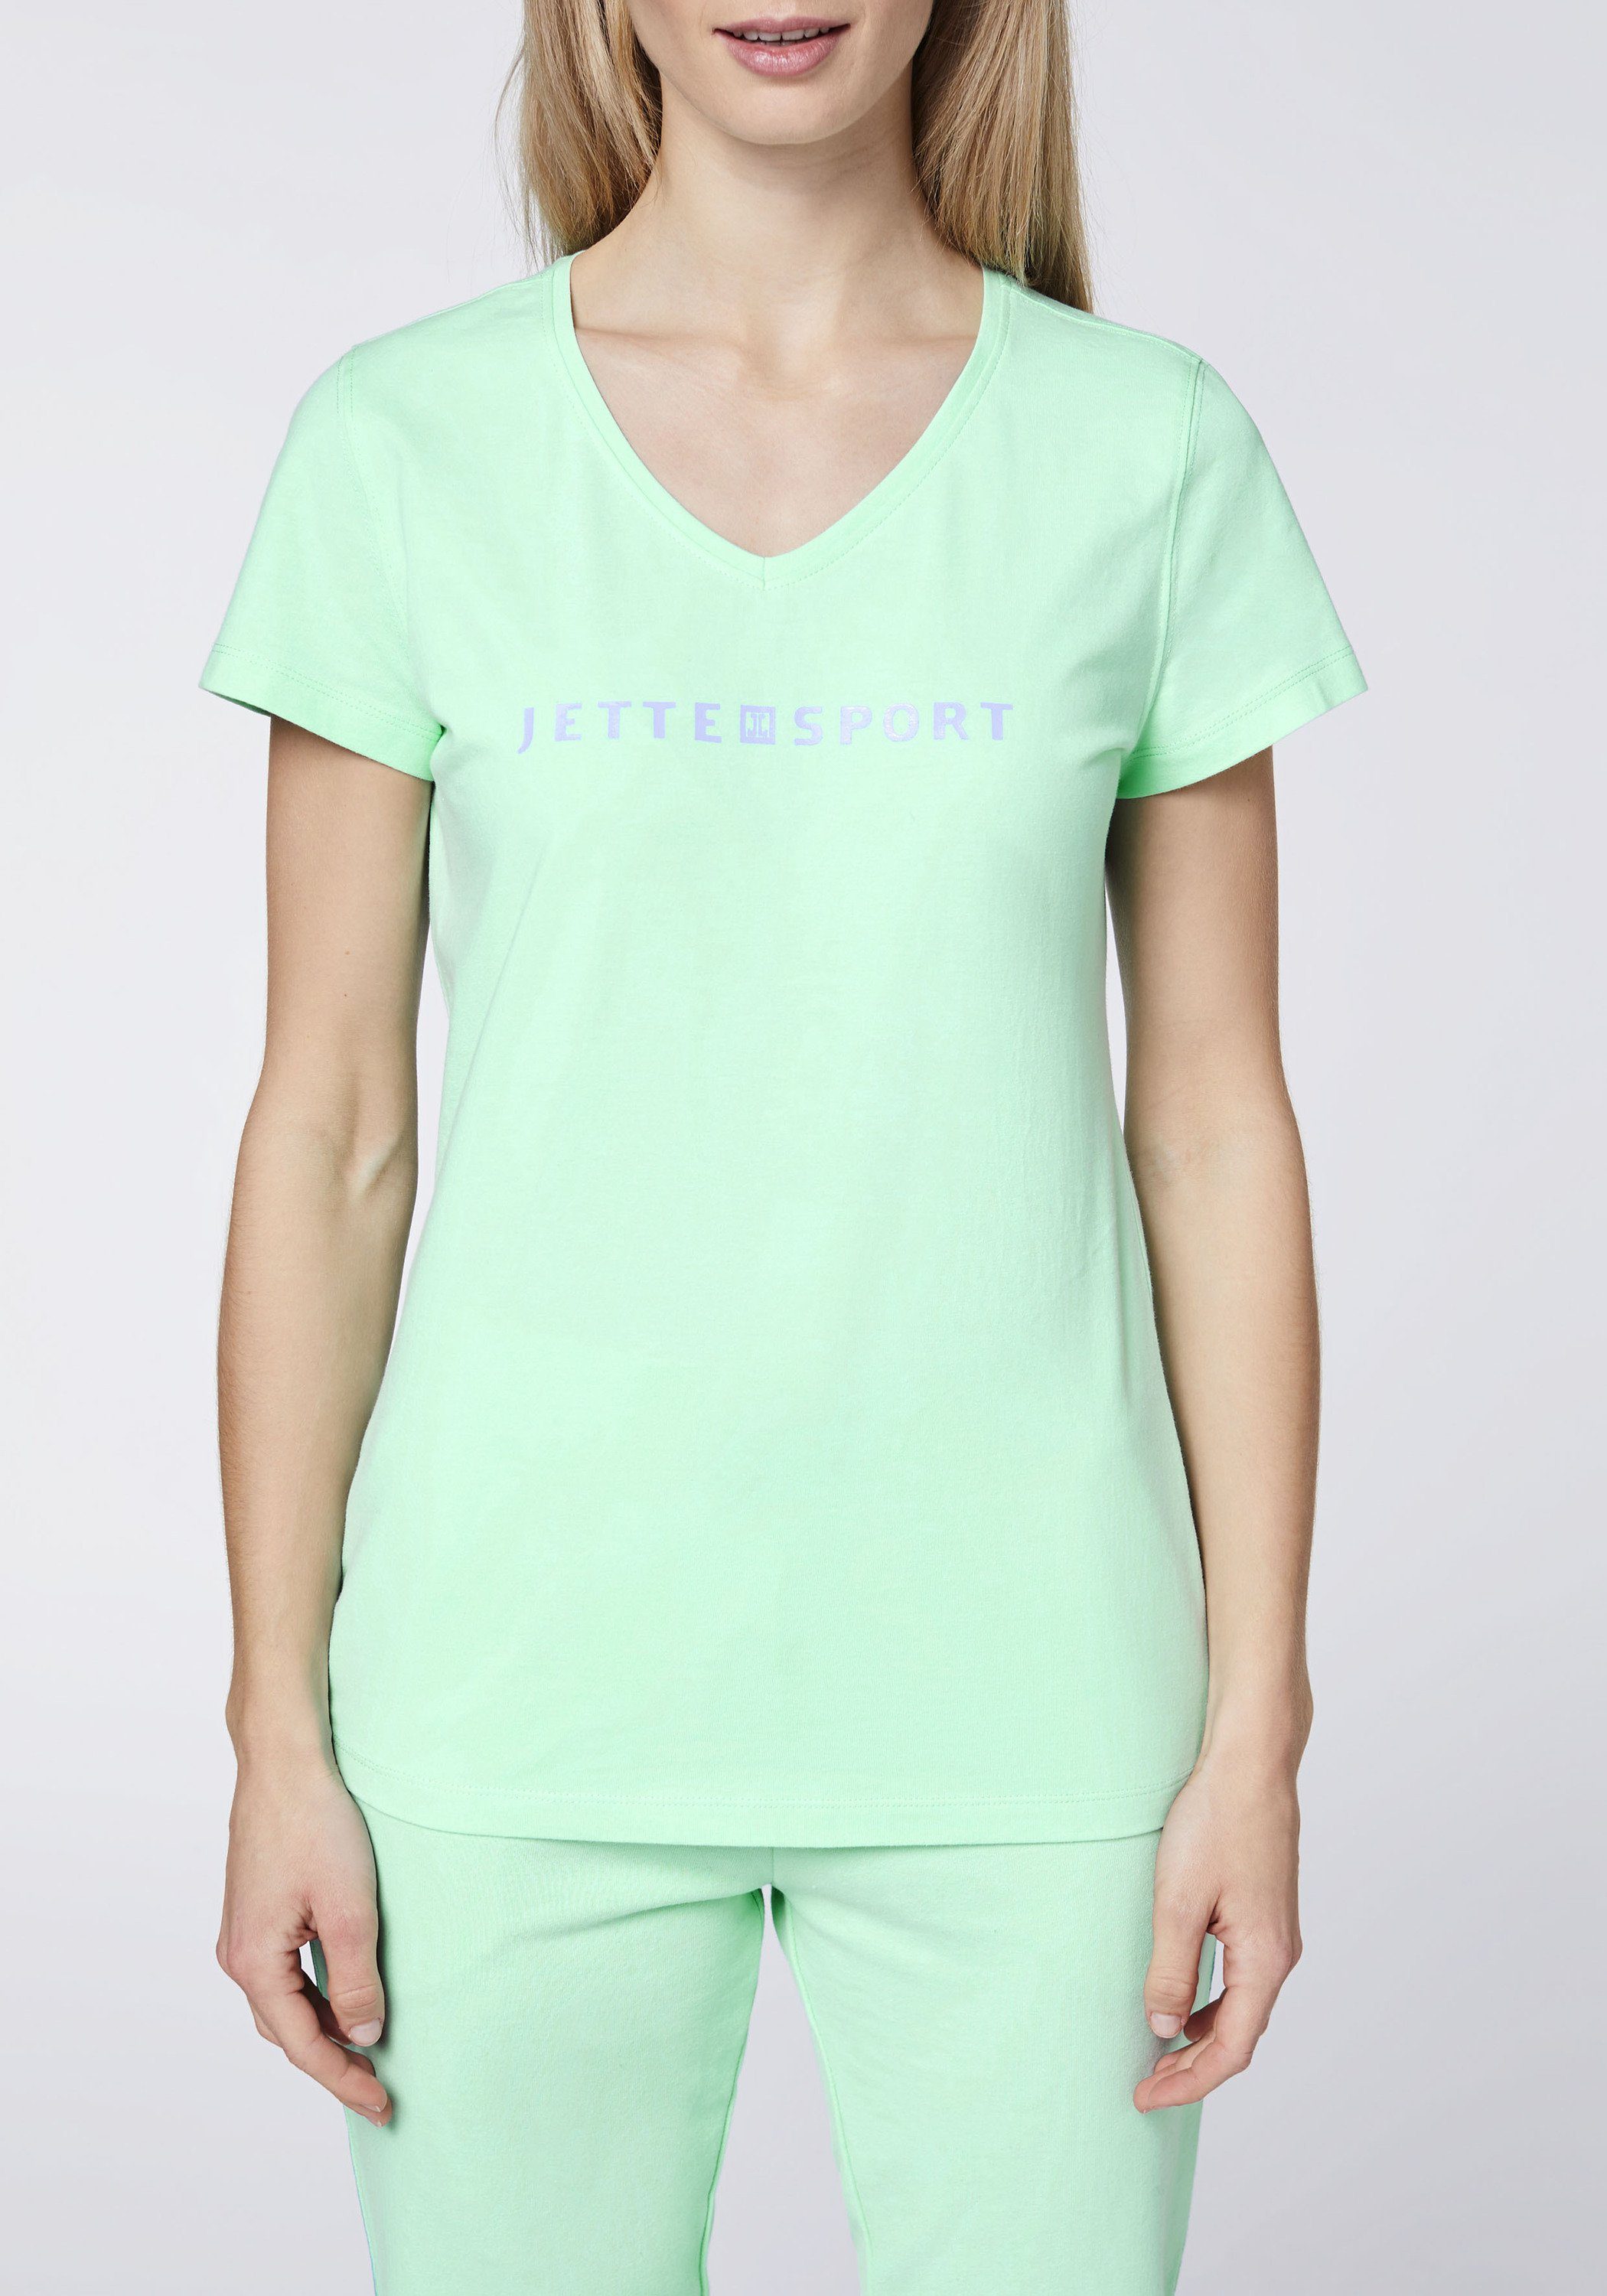 JETTE SPORT Print-Shirt mit Logo-Pigment-Print Beach Glass 13-5412